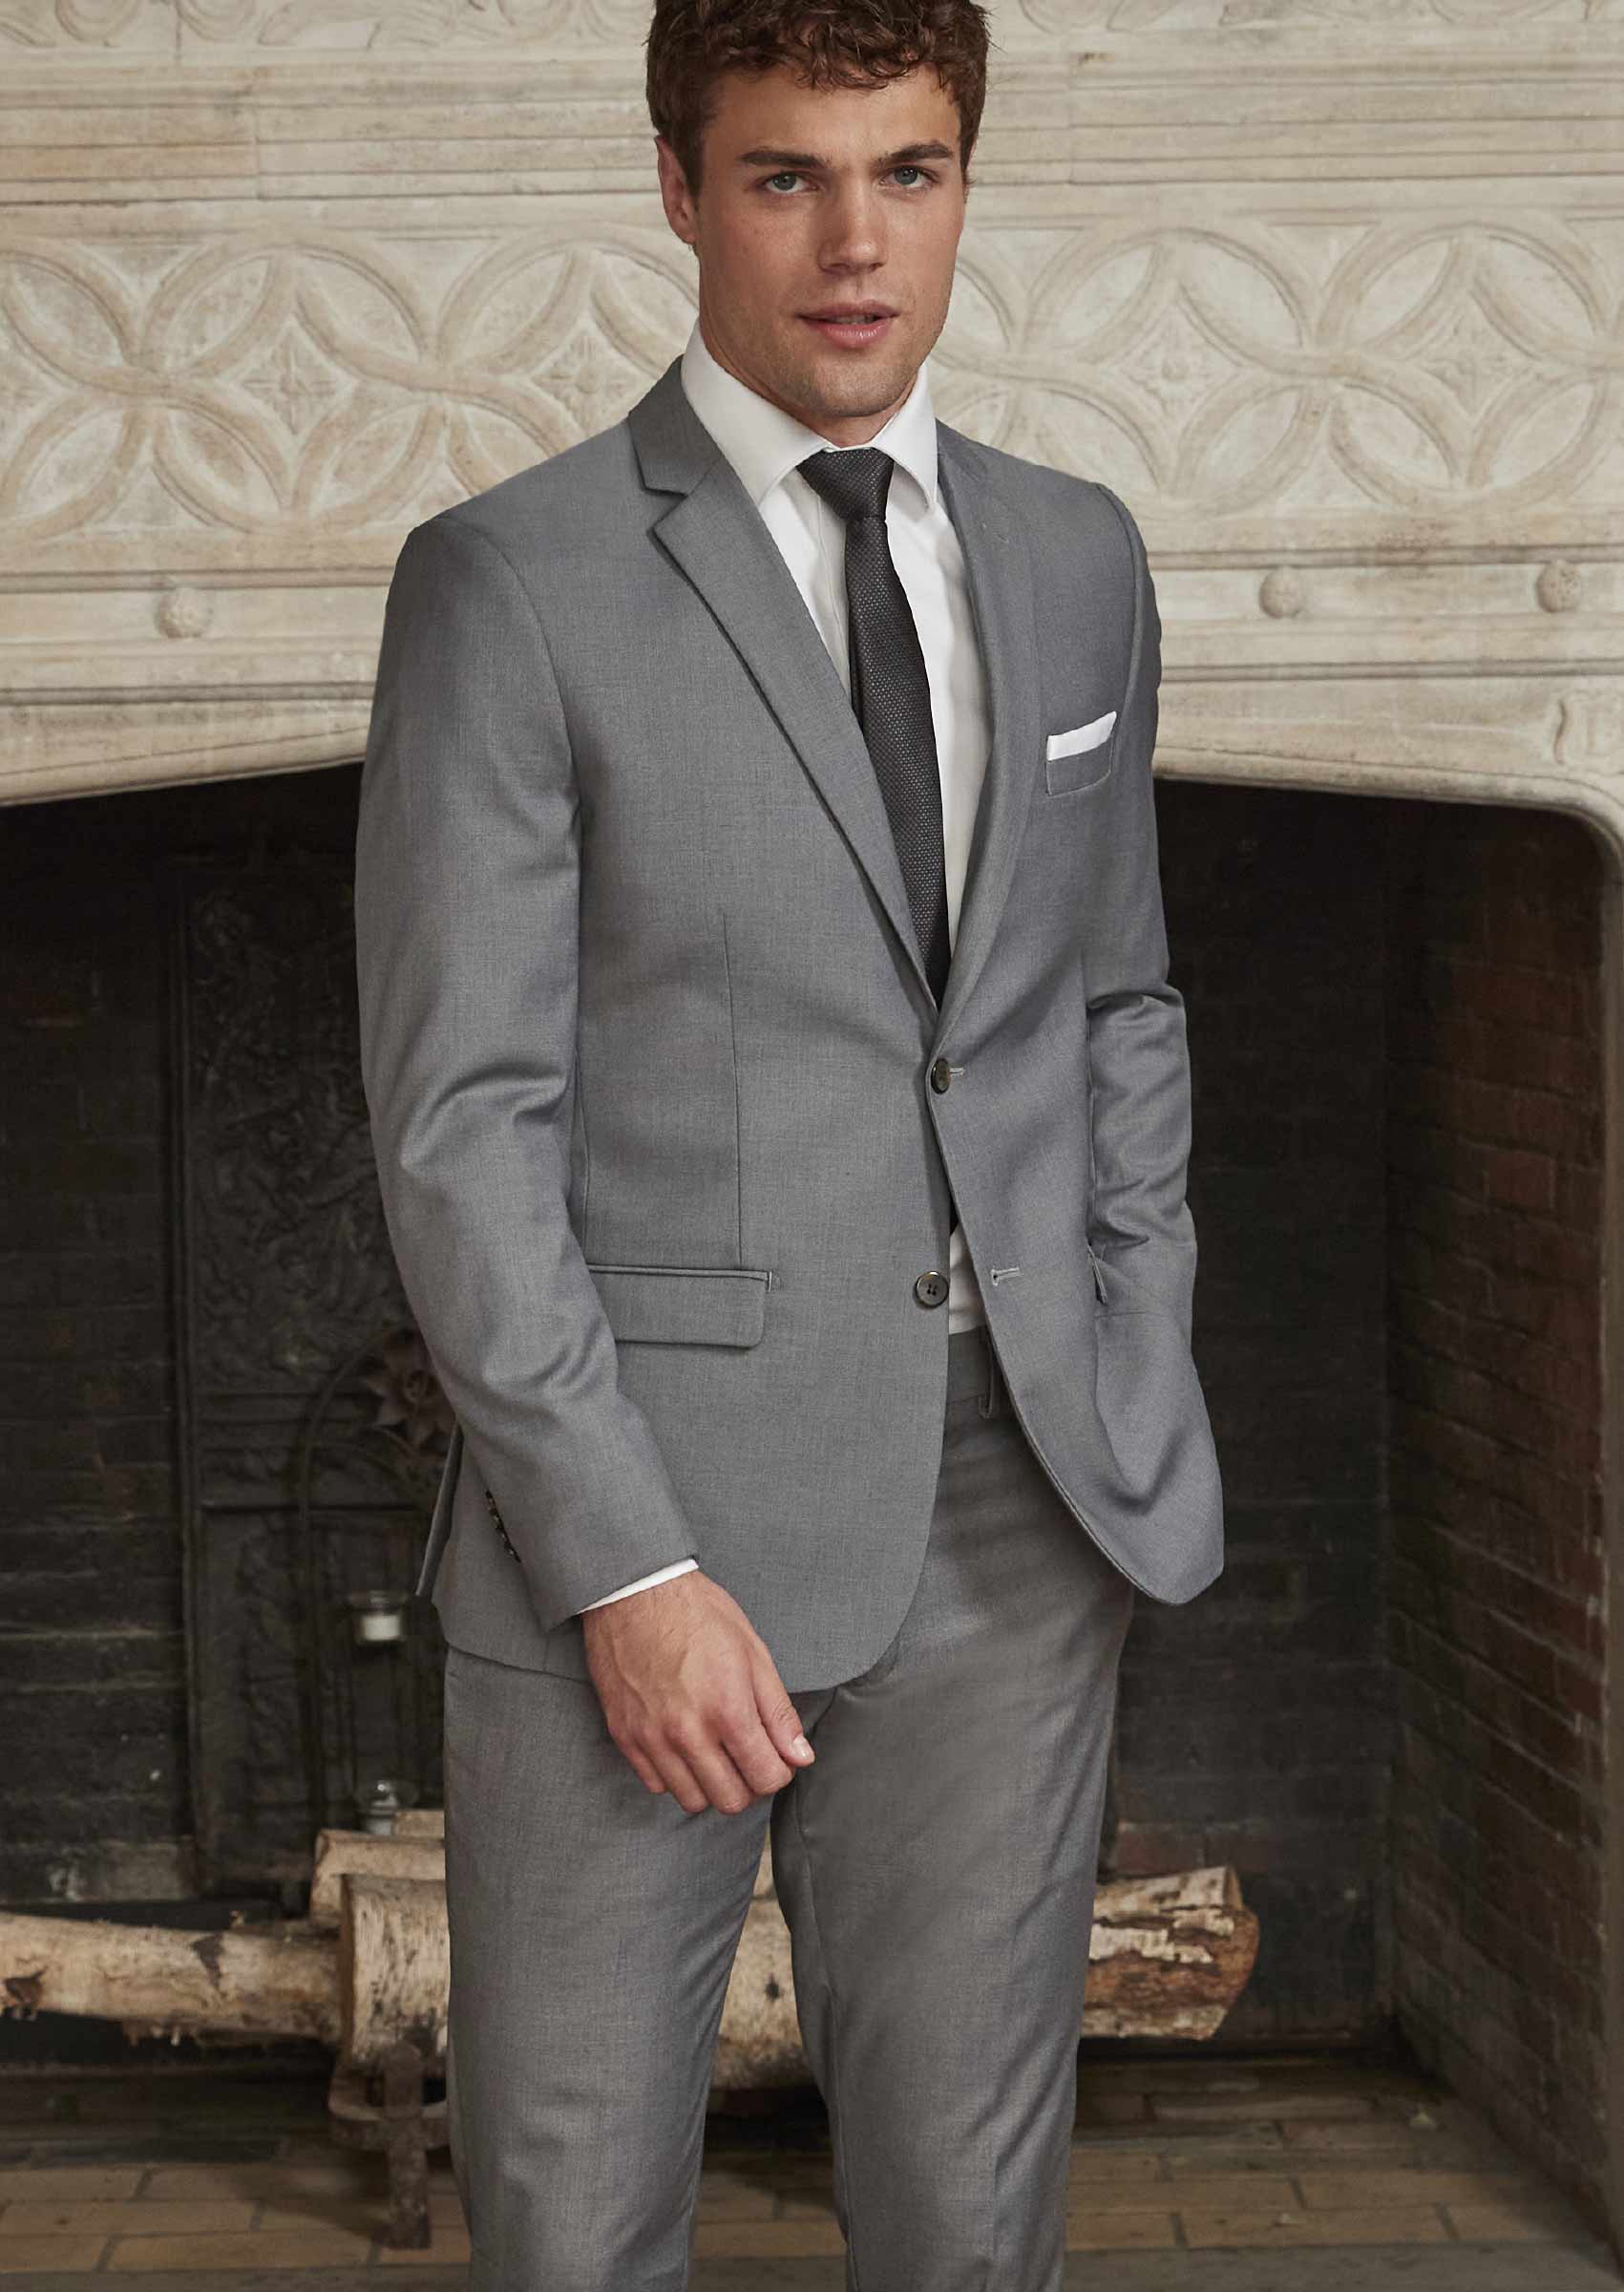 Grey Melange Suiting Fabric 2288